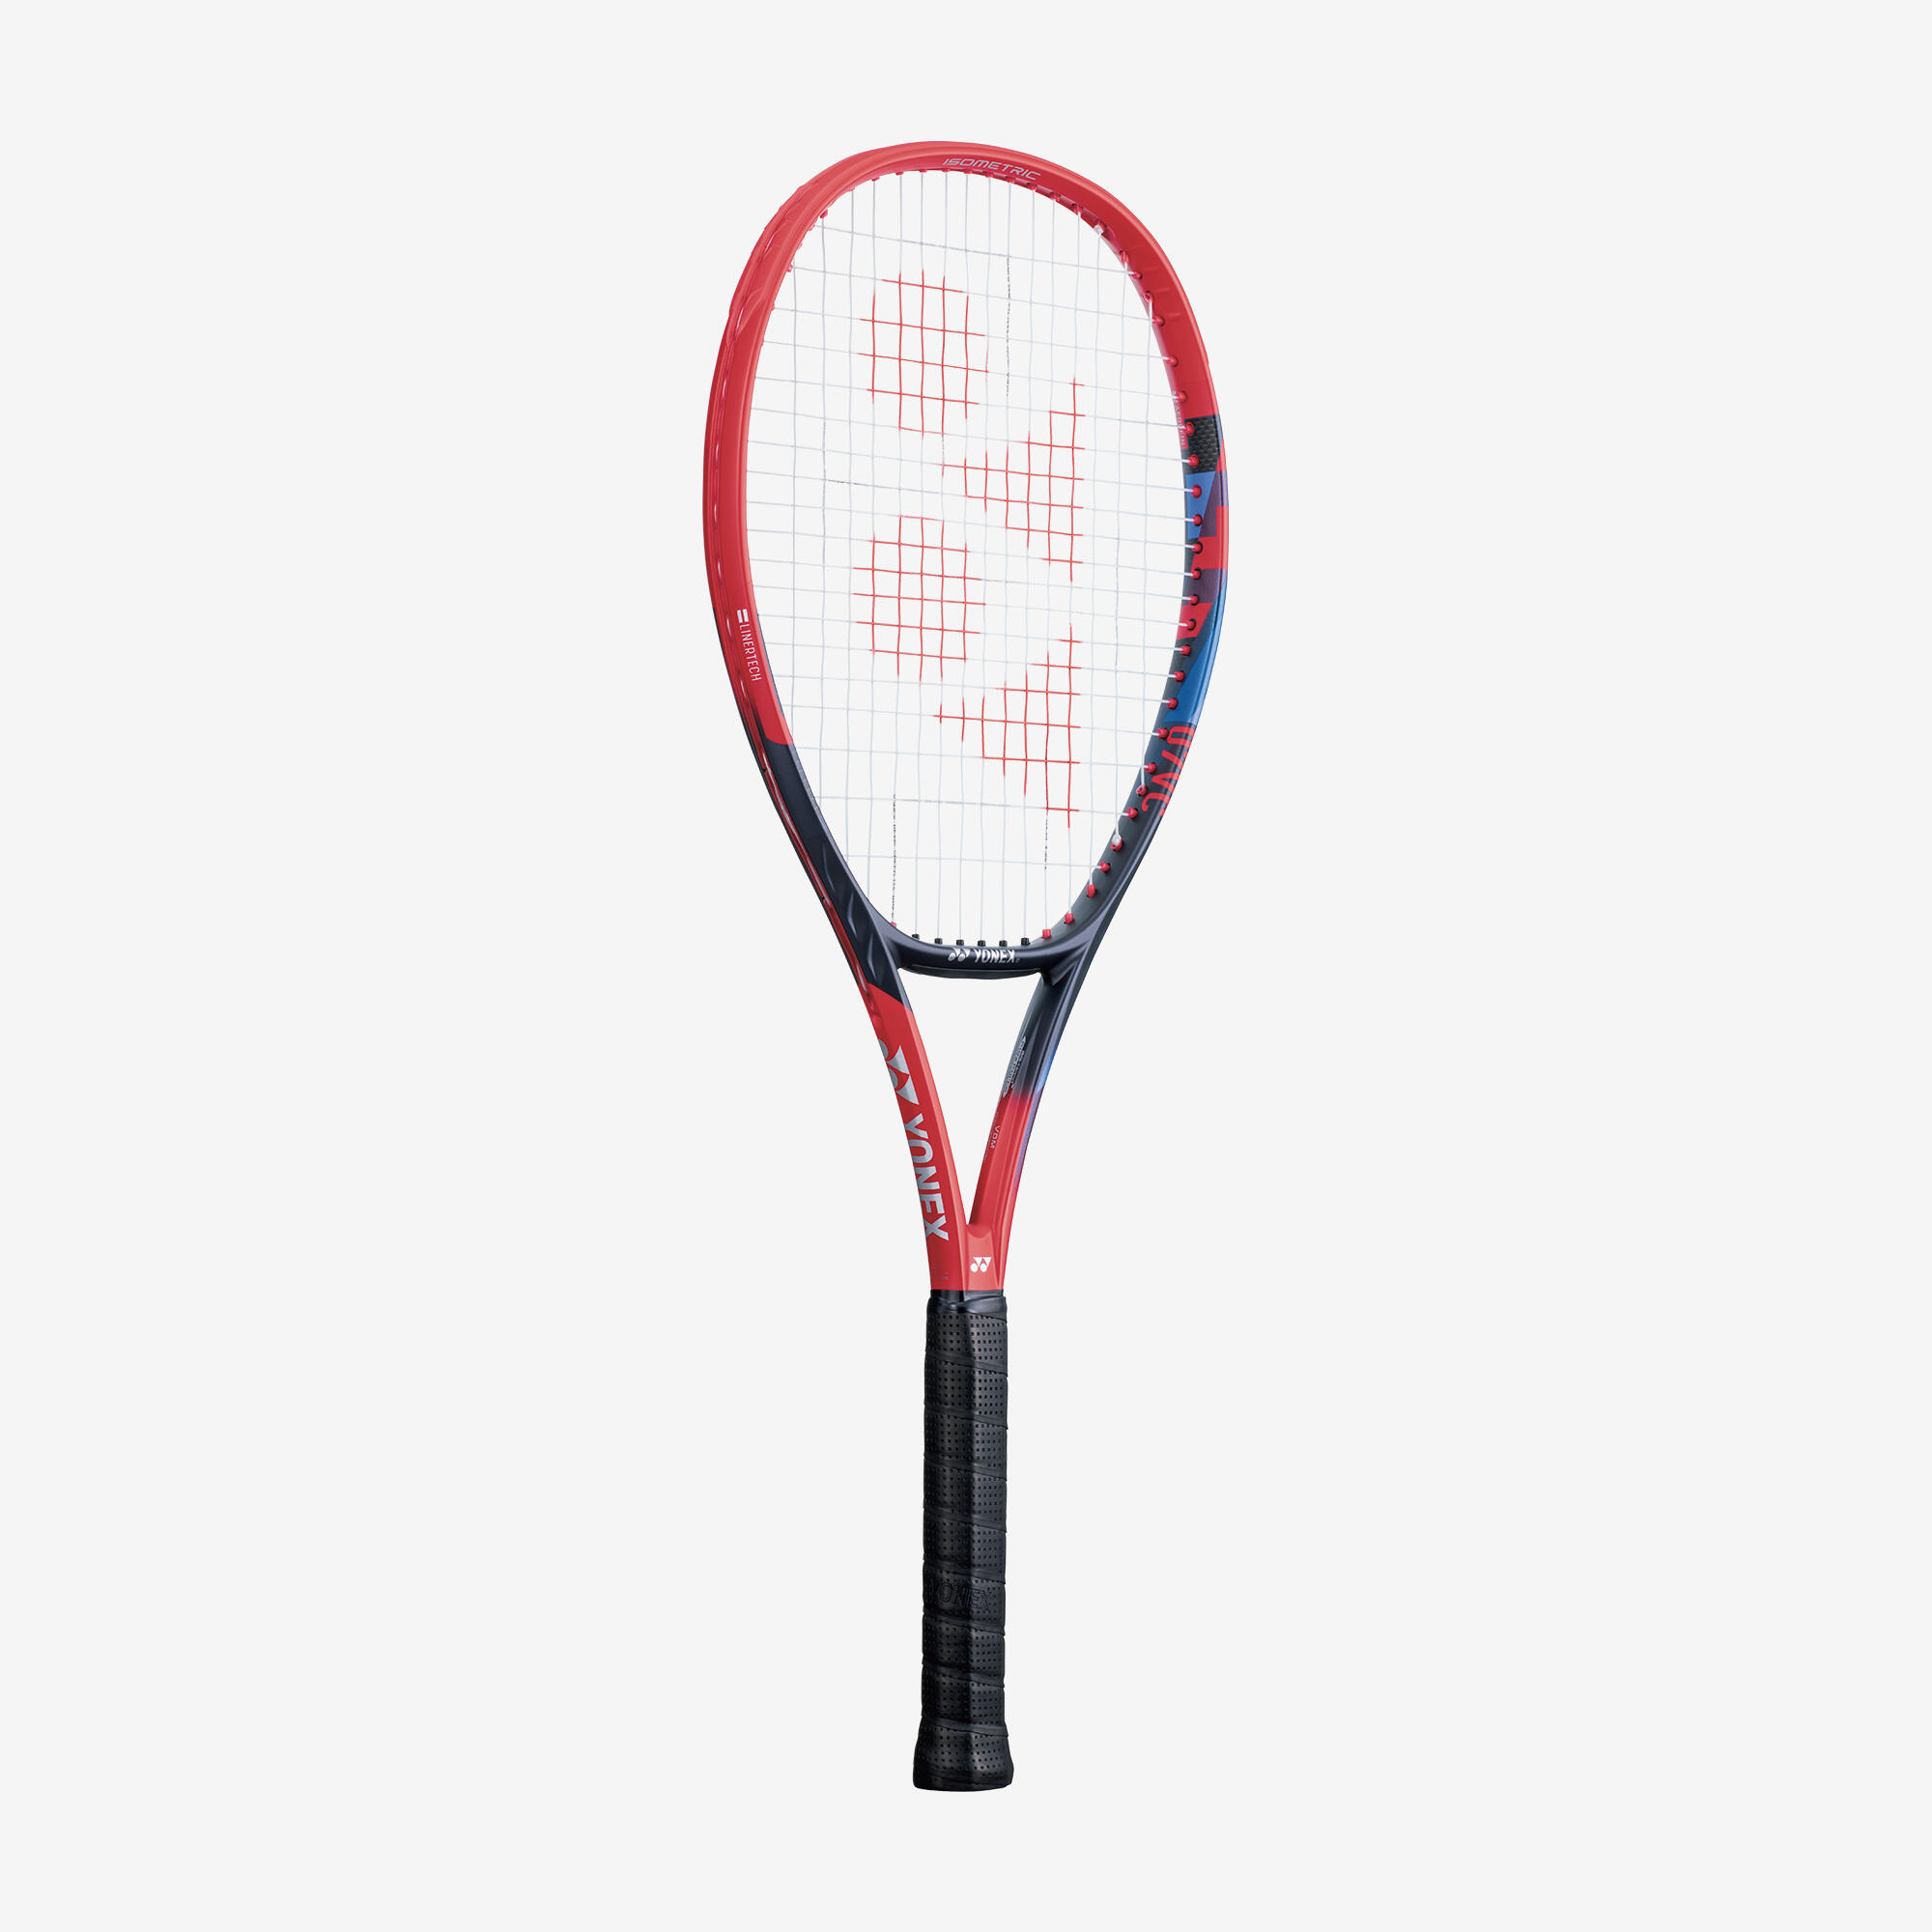 Rachetă Tenis YONEX EVCORE 100 300g Roșu Adulți La Oferta Online decathlon imagine La Oferta Online